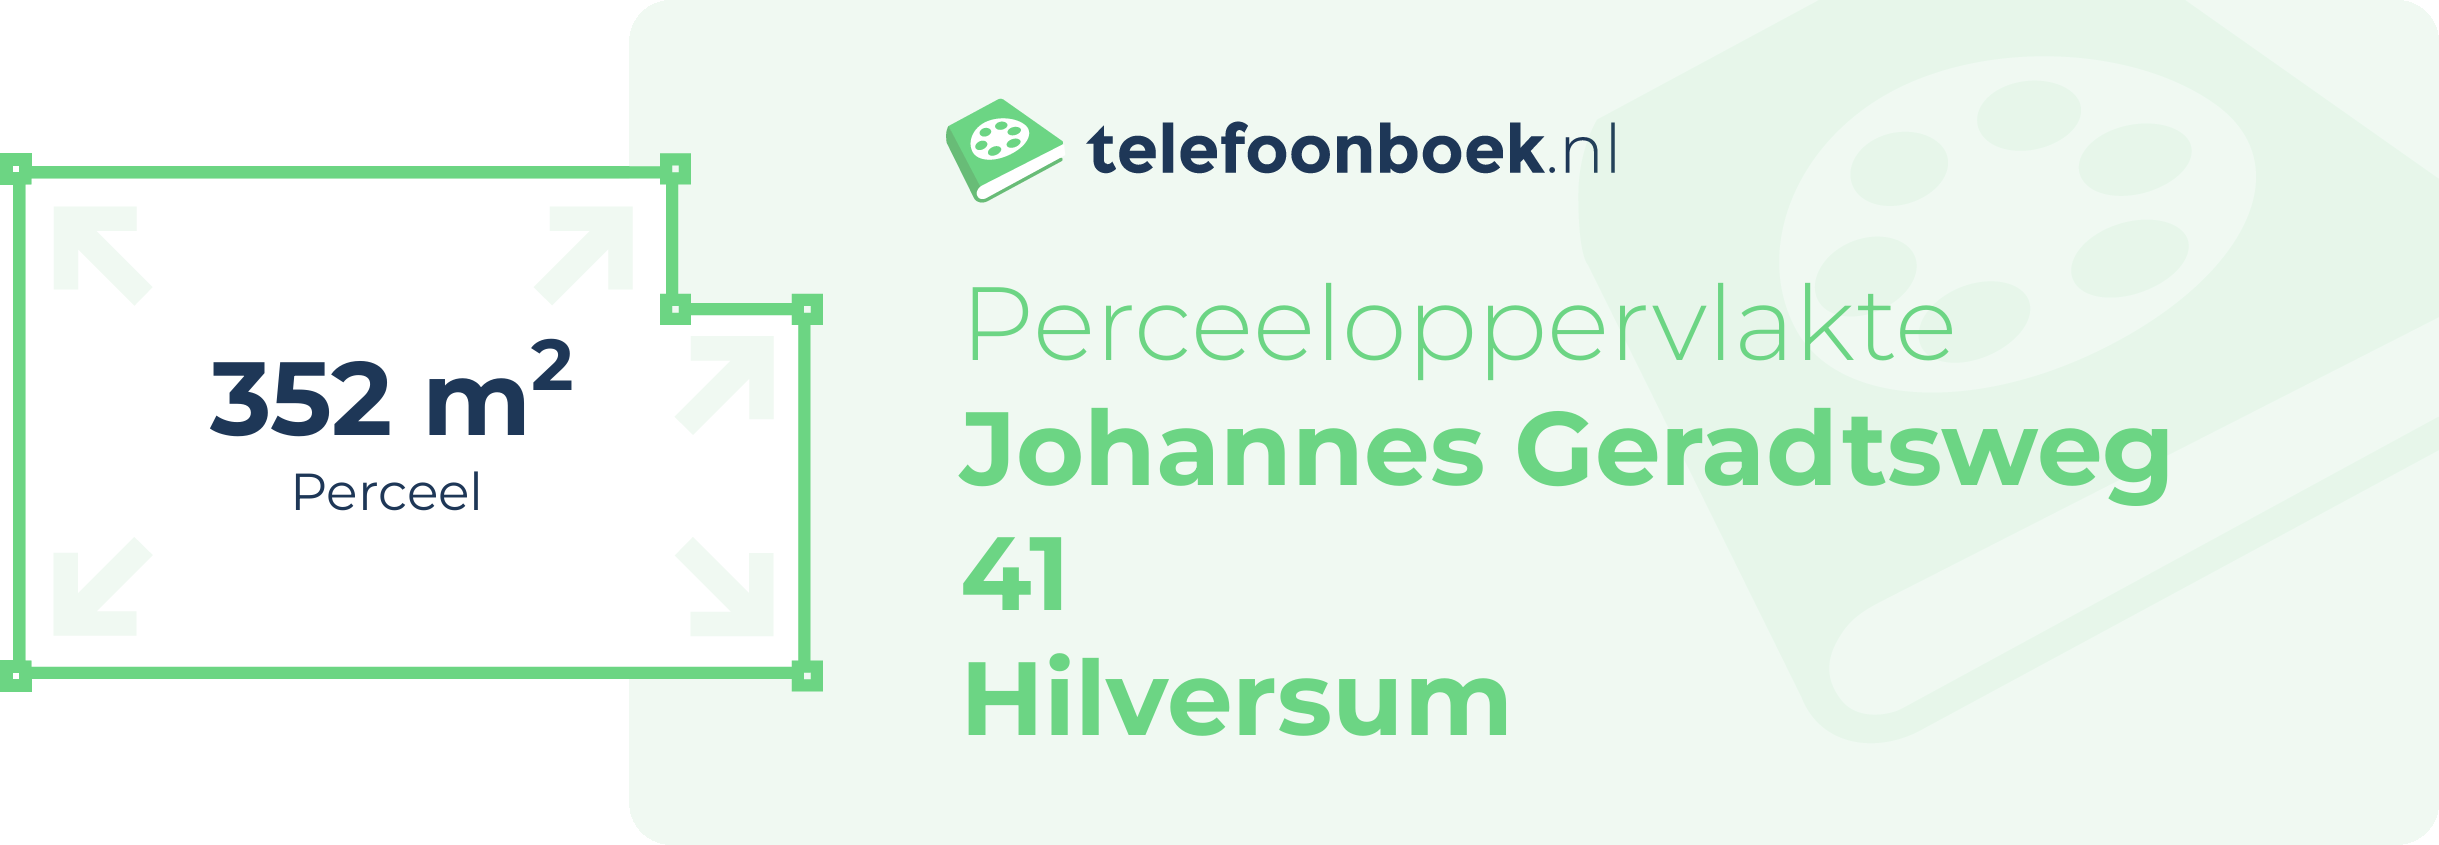 Perceeloppervlakte Johannes Geradtsweg 41 Hilversum